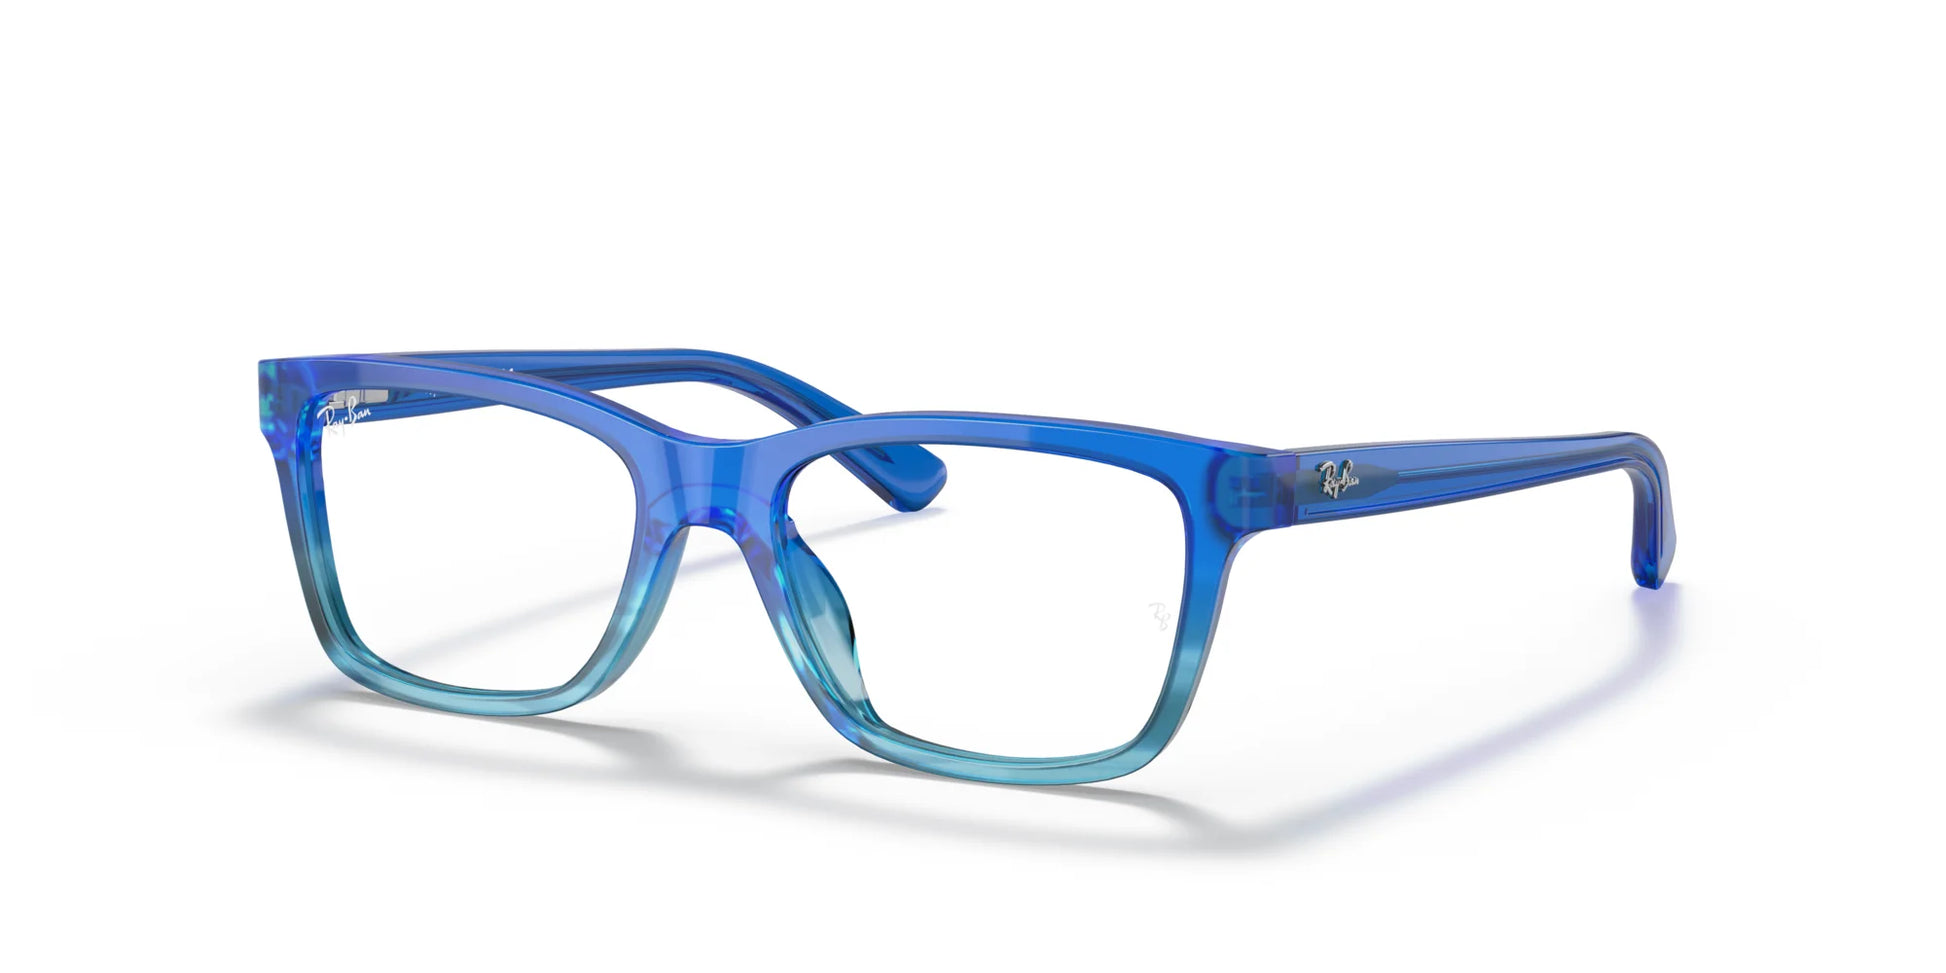 Ray-Ban RY1536 Eyeglasses Blue Gradient / Clear